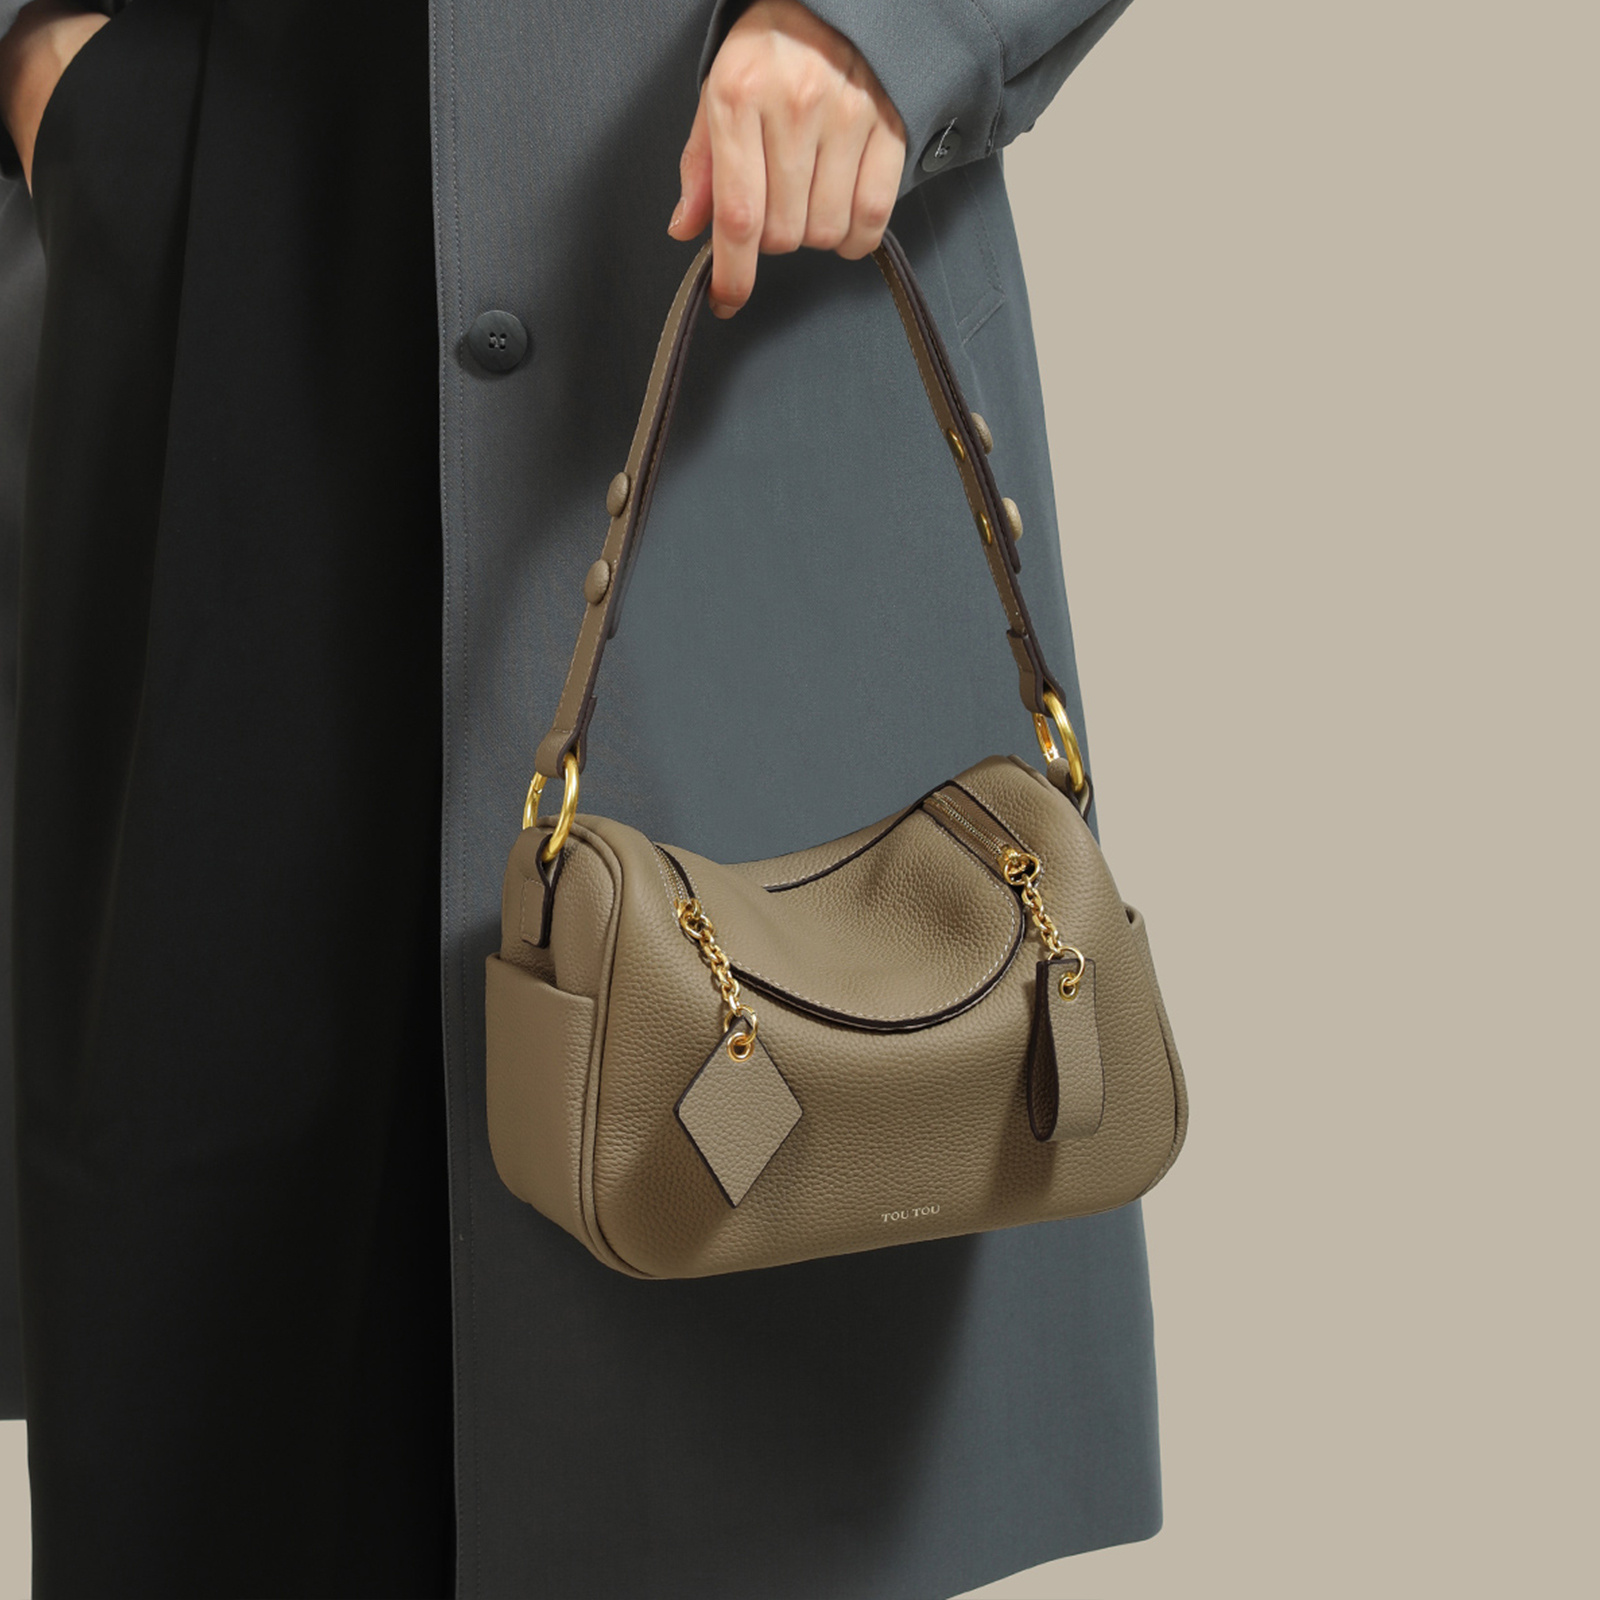 Toutou Ghost Embossed Handbags, Cute Cartoon Shoulder Bag, Small